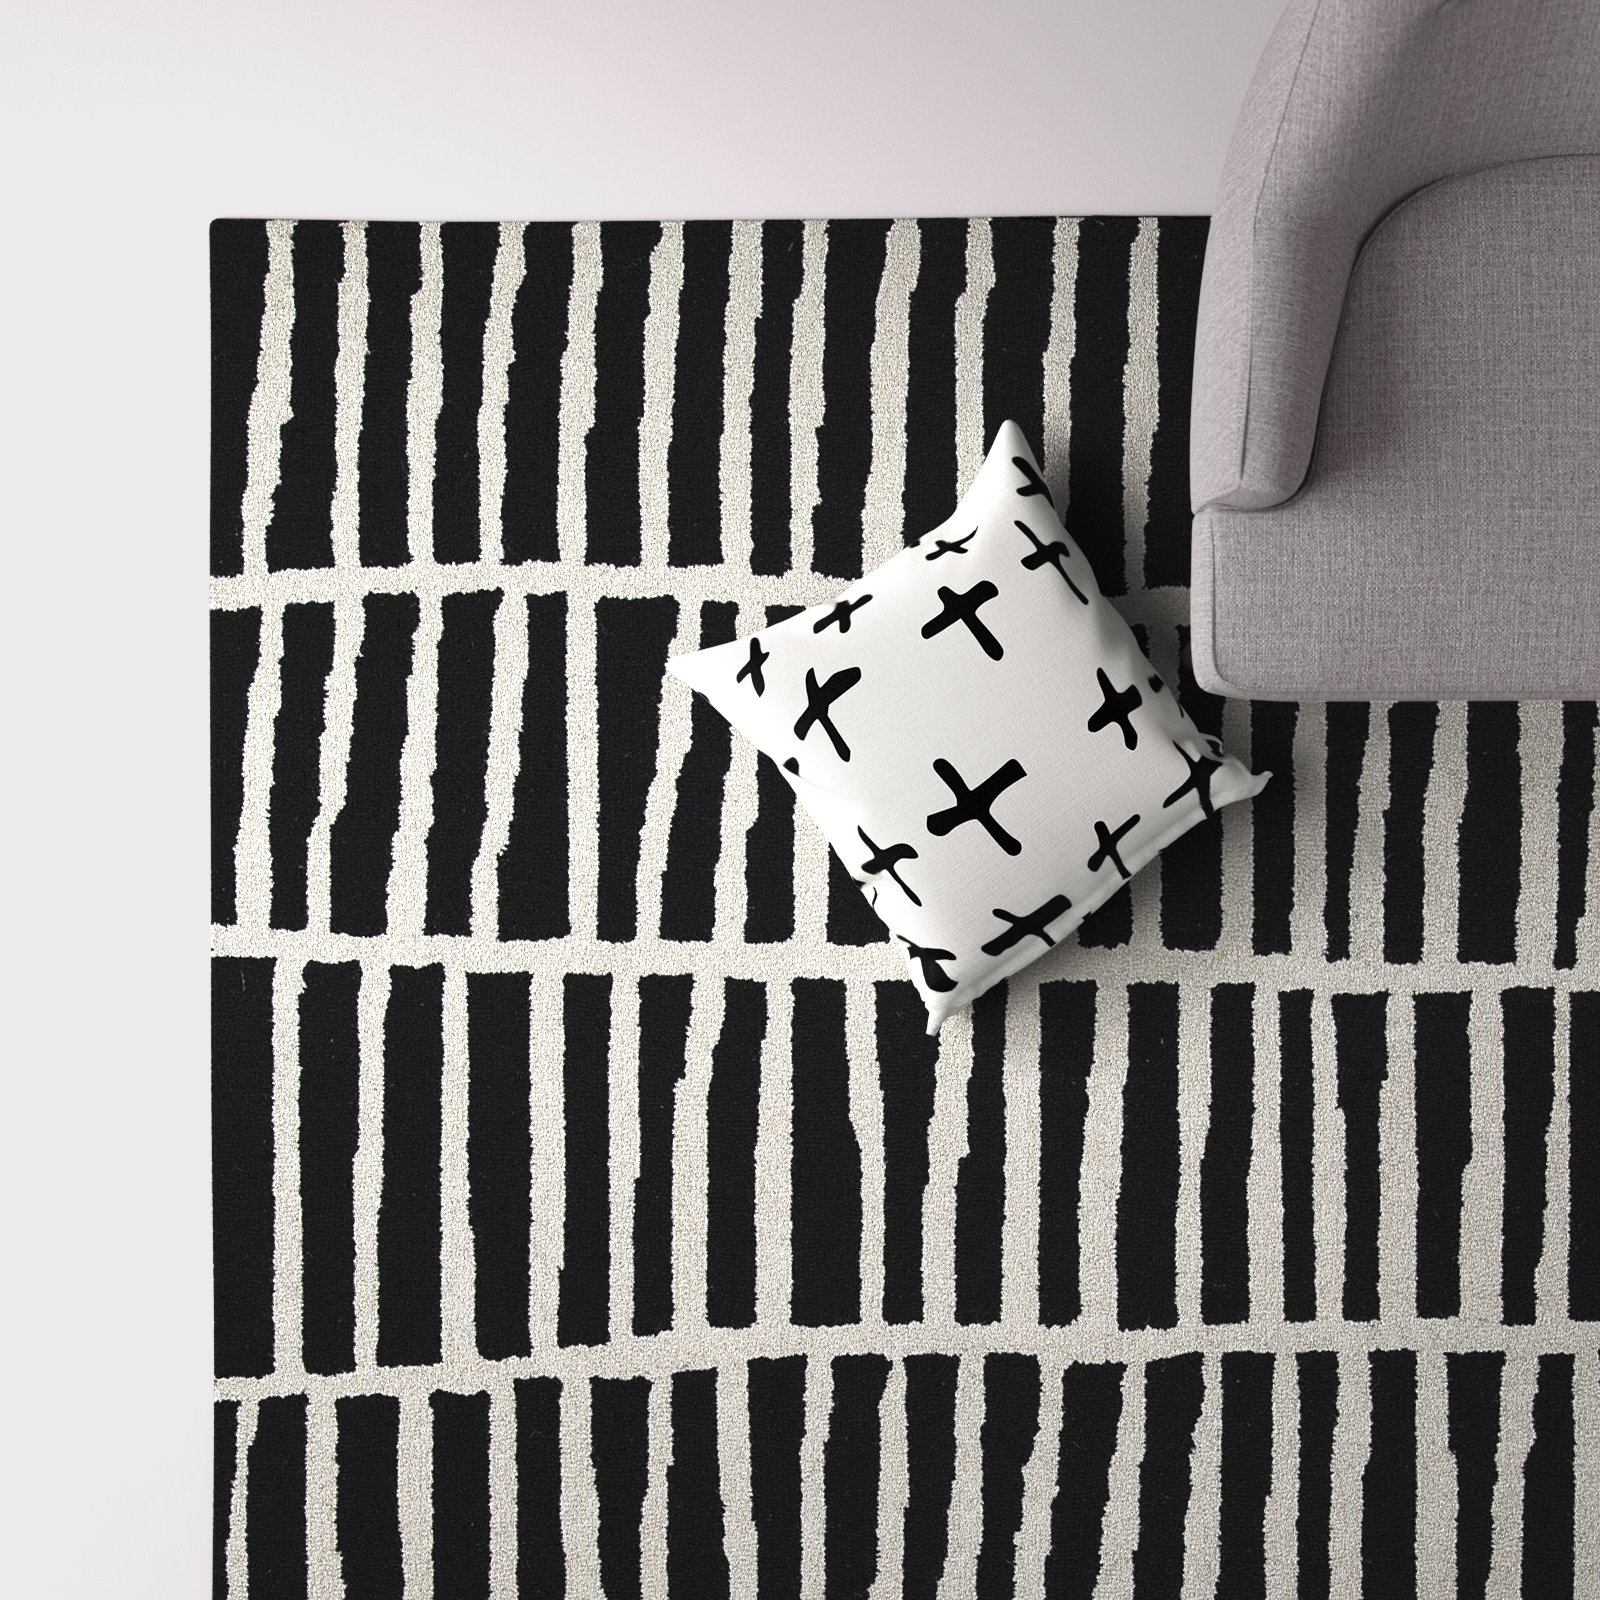 Dave Geometric Black & White Hand-Tufted 100% Wool Soft Area Rug